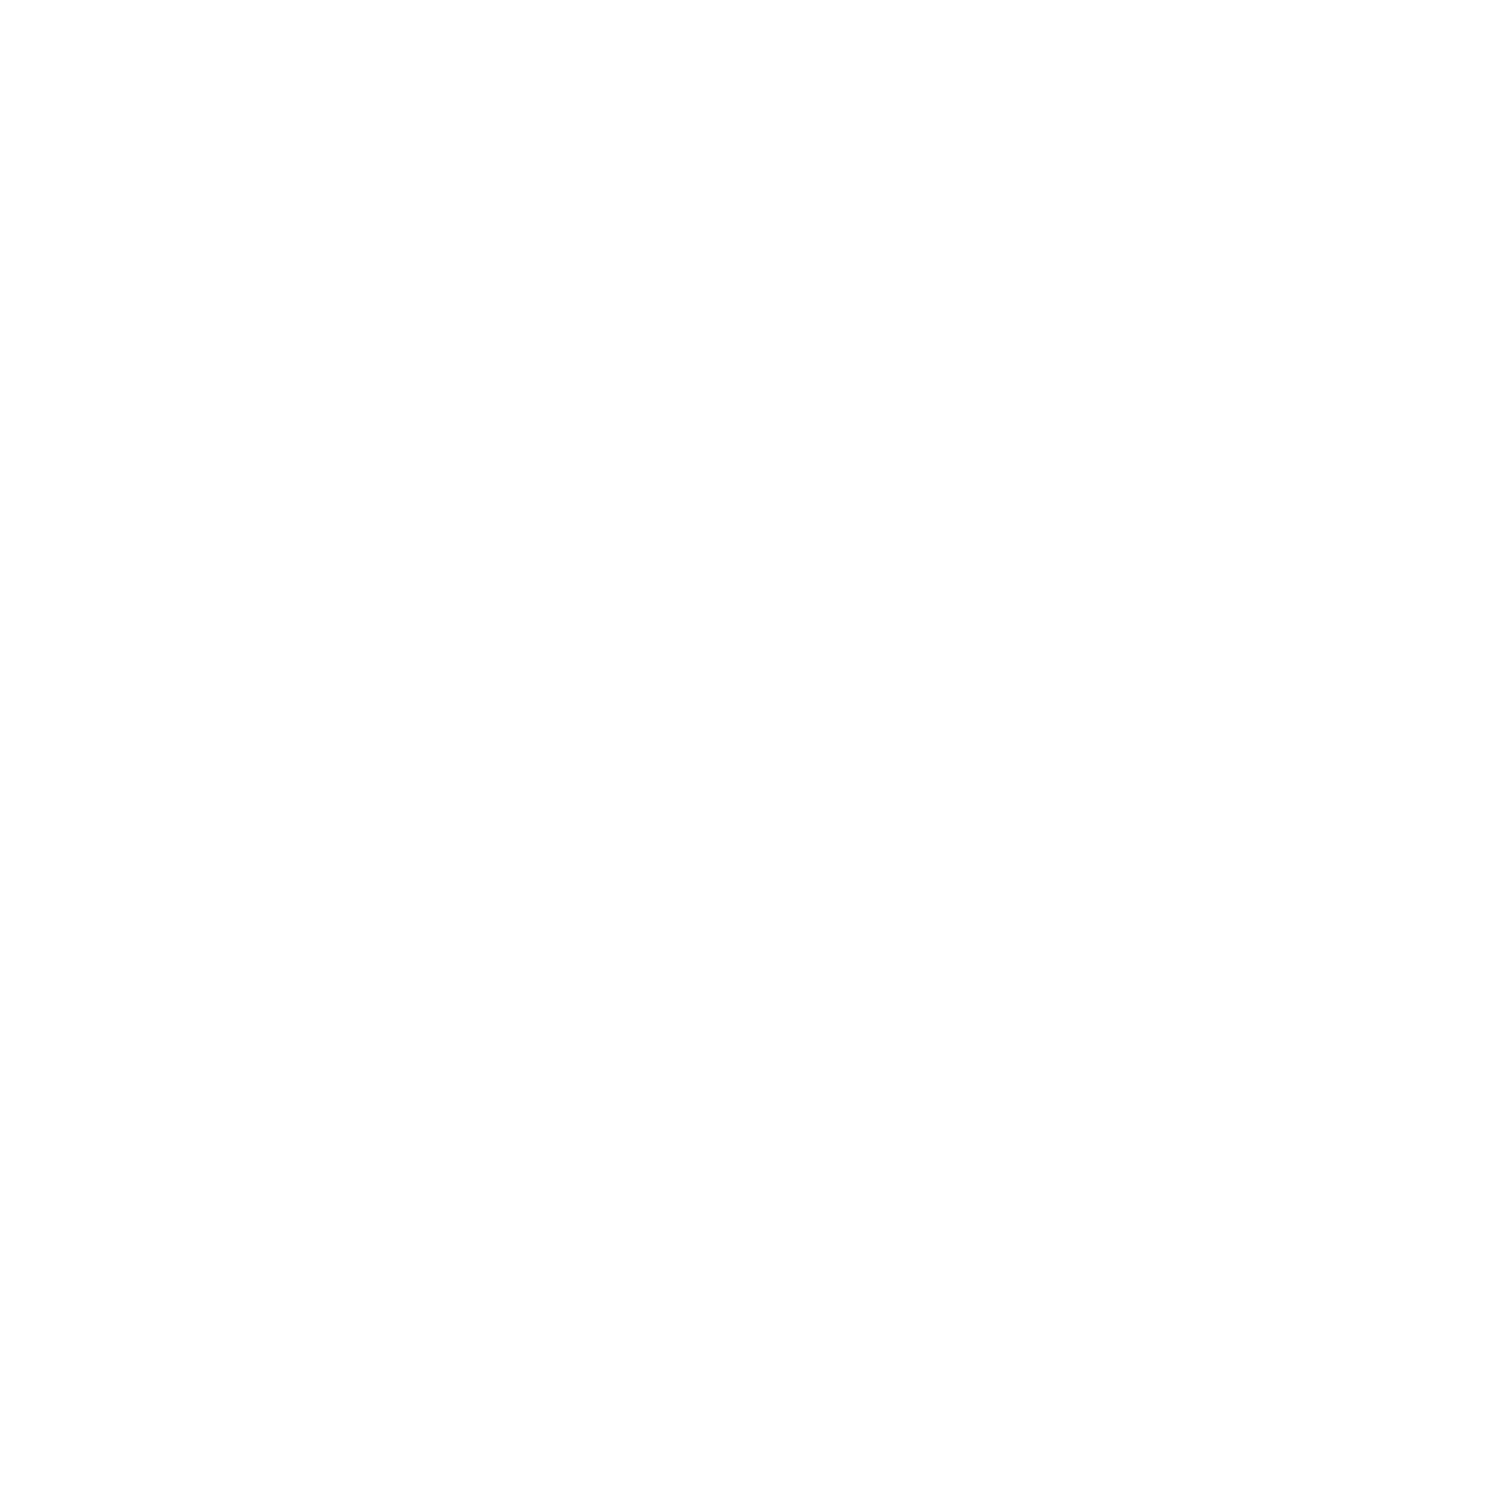 Washington Building Leaders of Change